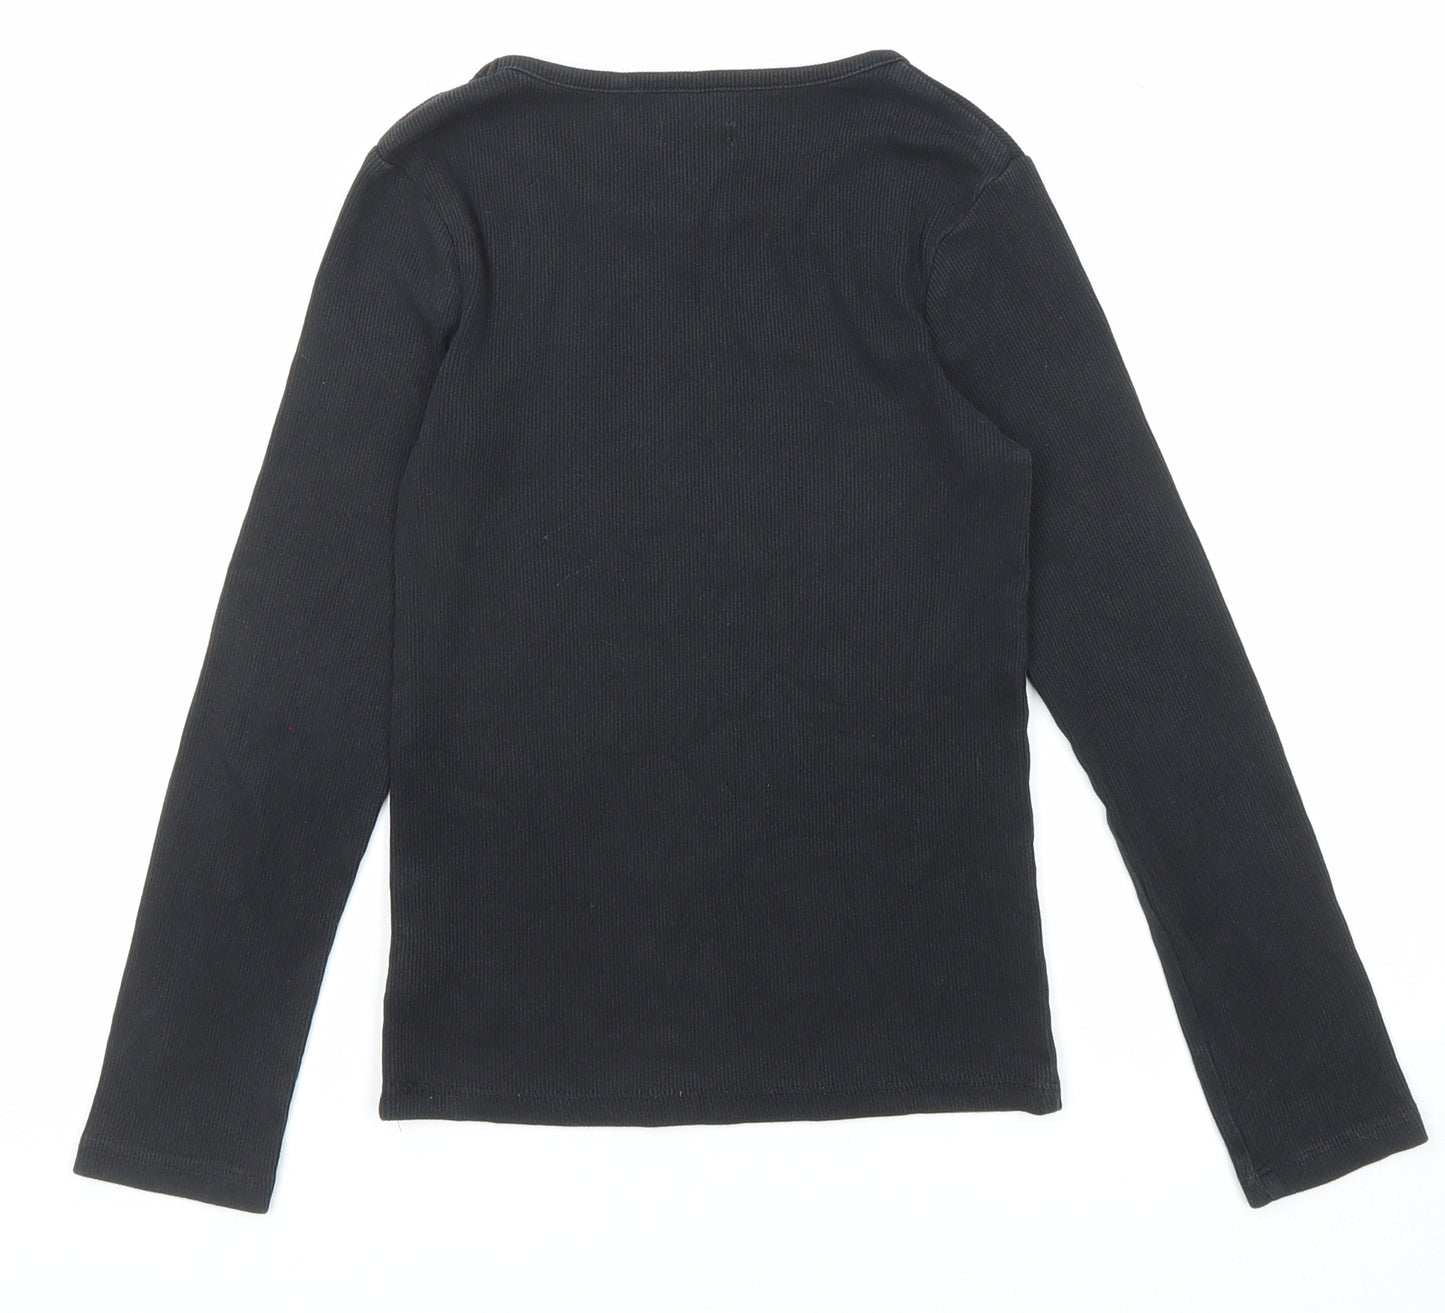 NEXT Girls Black Cotton Basic T-Shirt Size 8 Years Round Neck Pullover